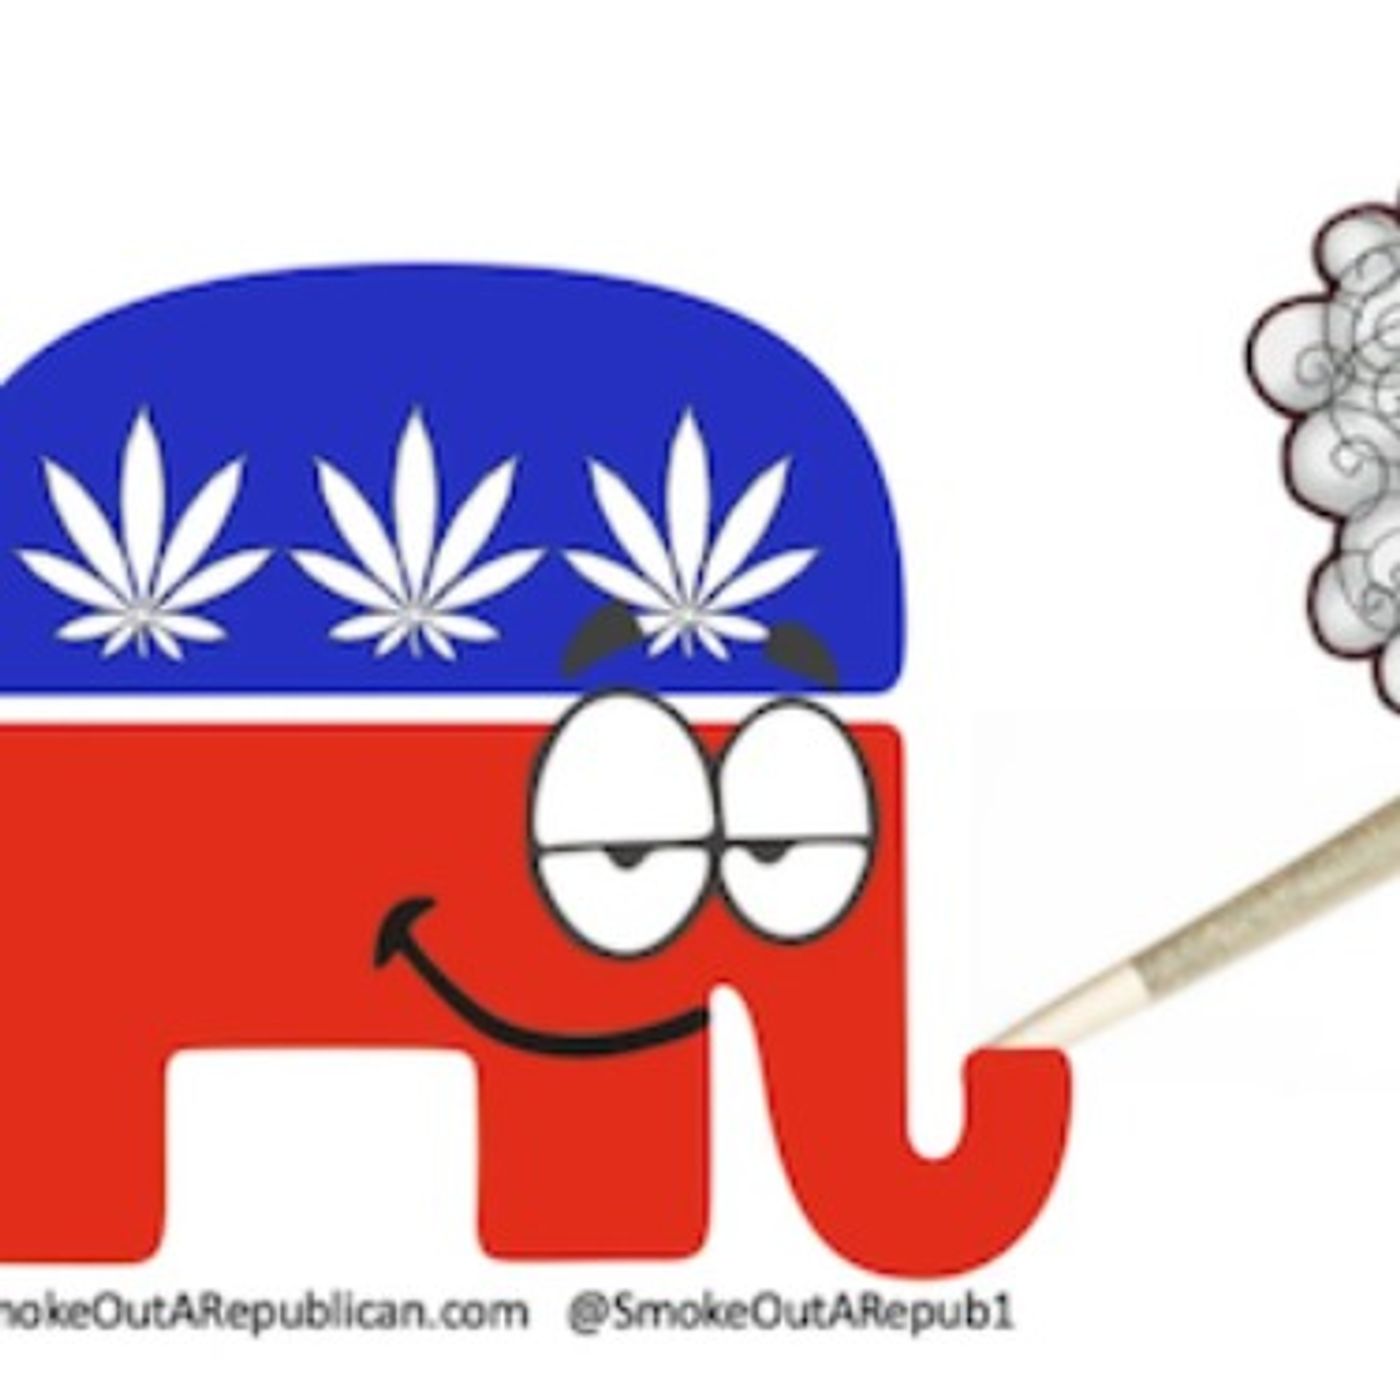 76 | Bill Hill, Smoke Out a Republican